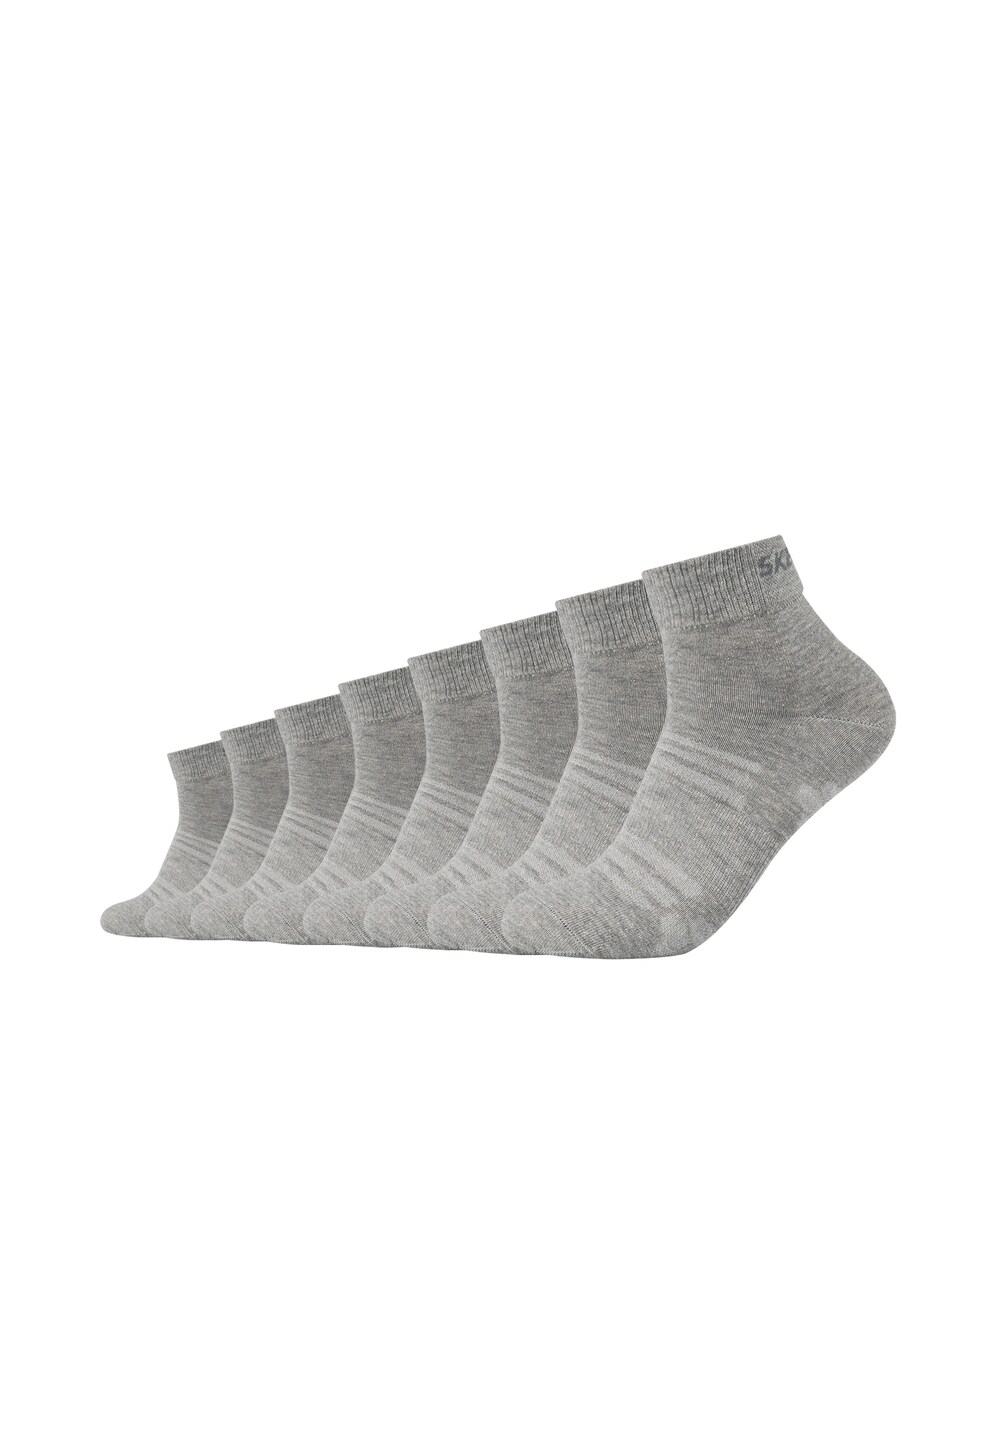 Носки SKECHERS Phoenix, светло-серый